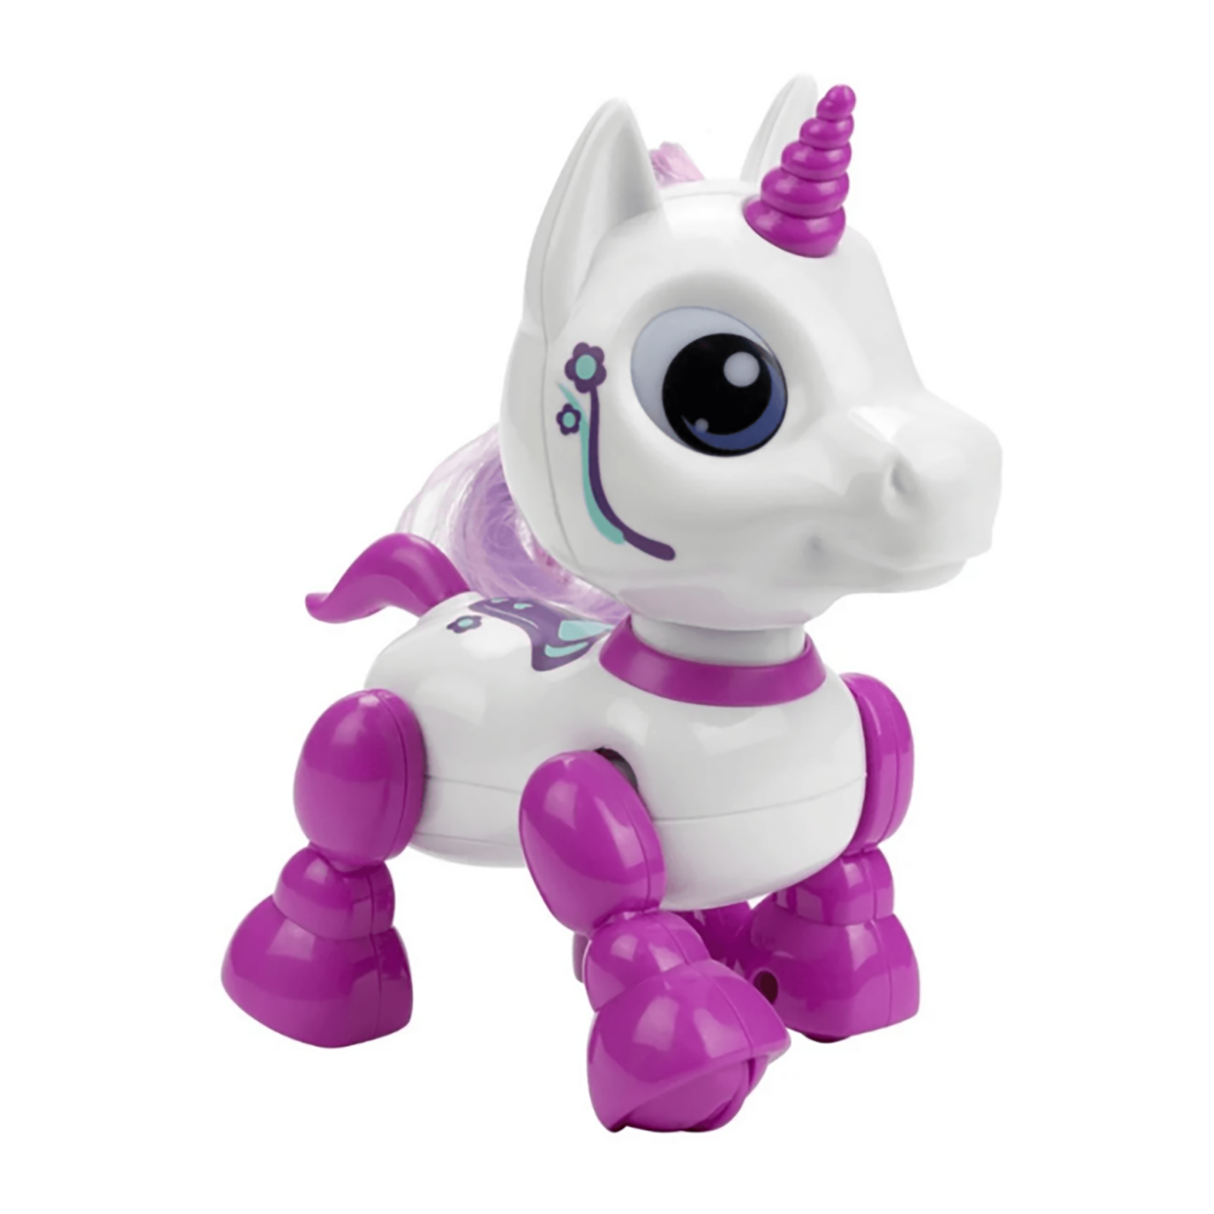 SILVERLIT Robo Heads Up - Unicorn